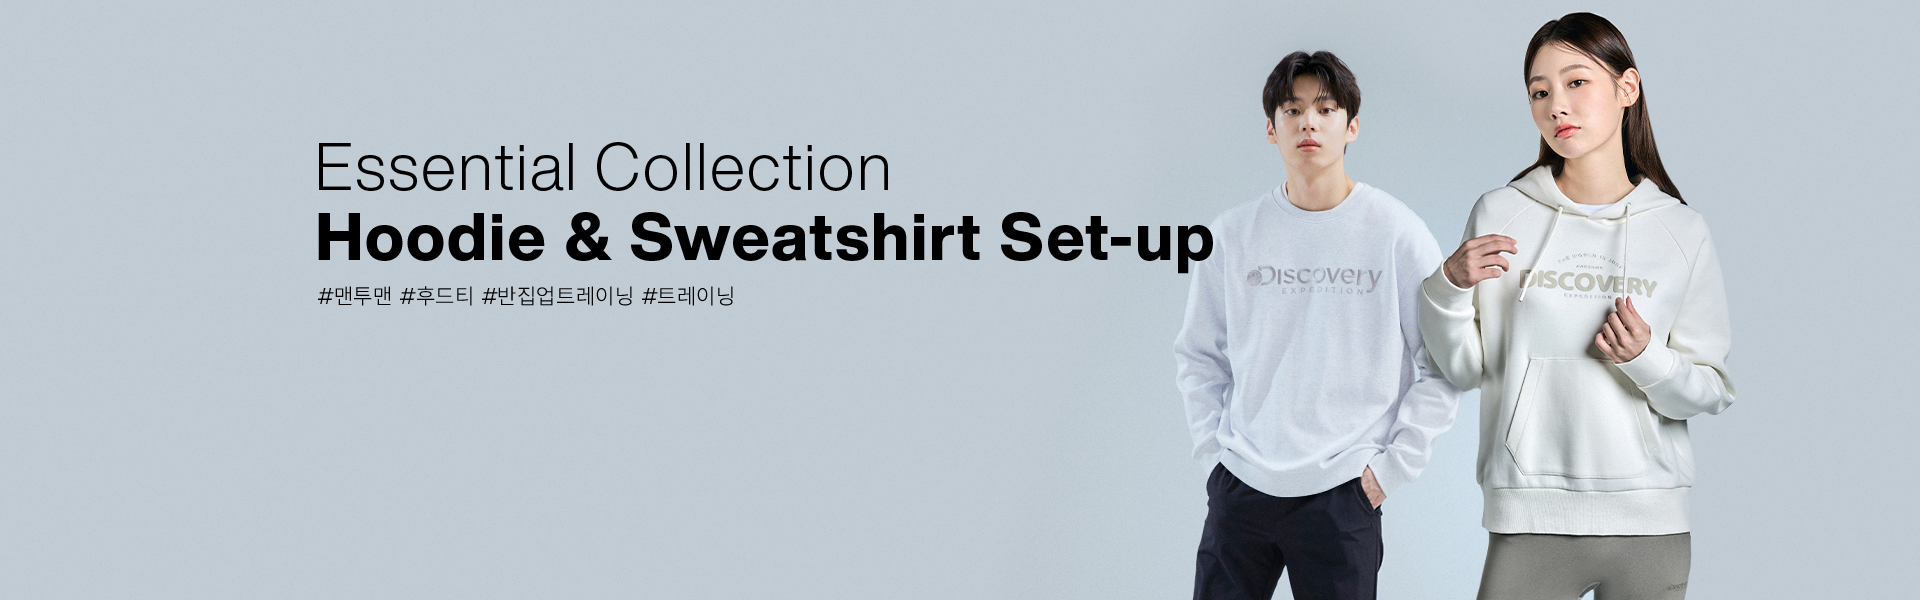 Essential Collection Hoodie & Sweatshirt Set-up